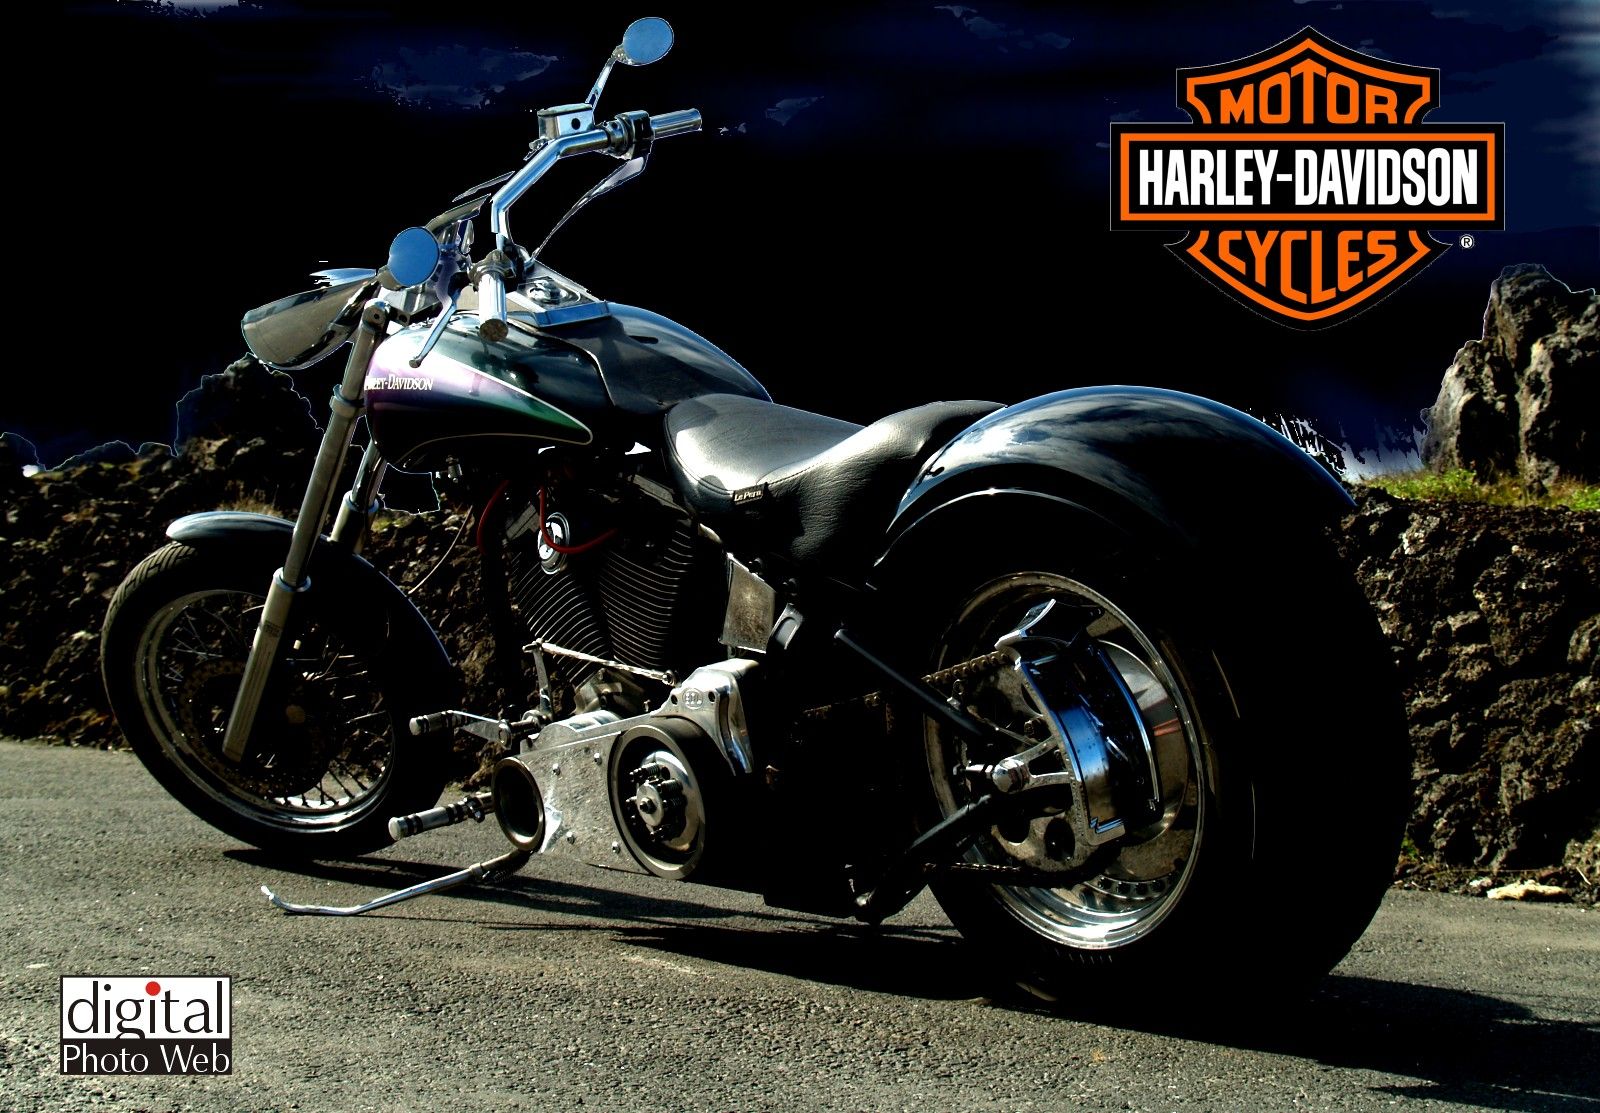 Harley Davidson Bike Wallpapers On PC Desktop Full HD Pictures